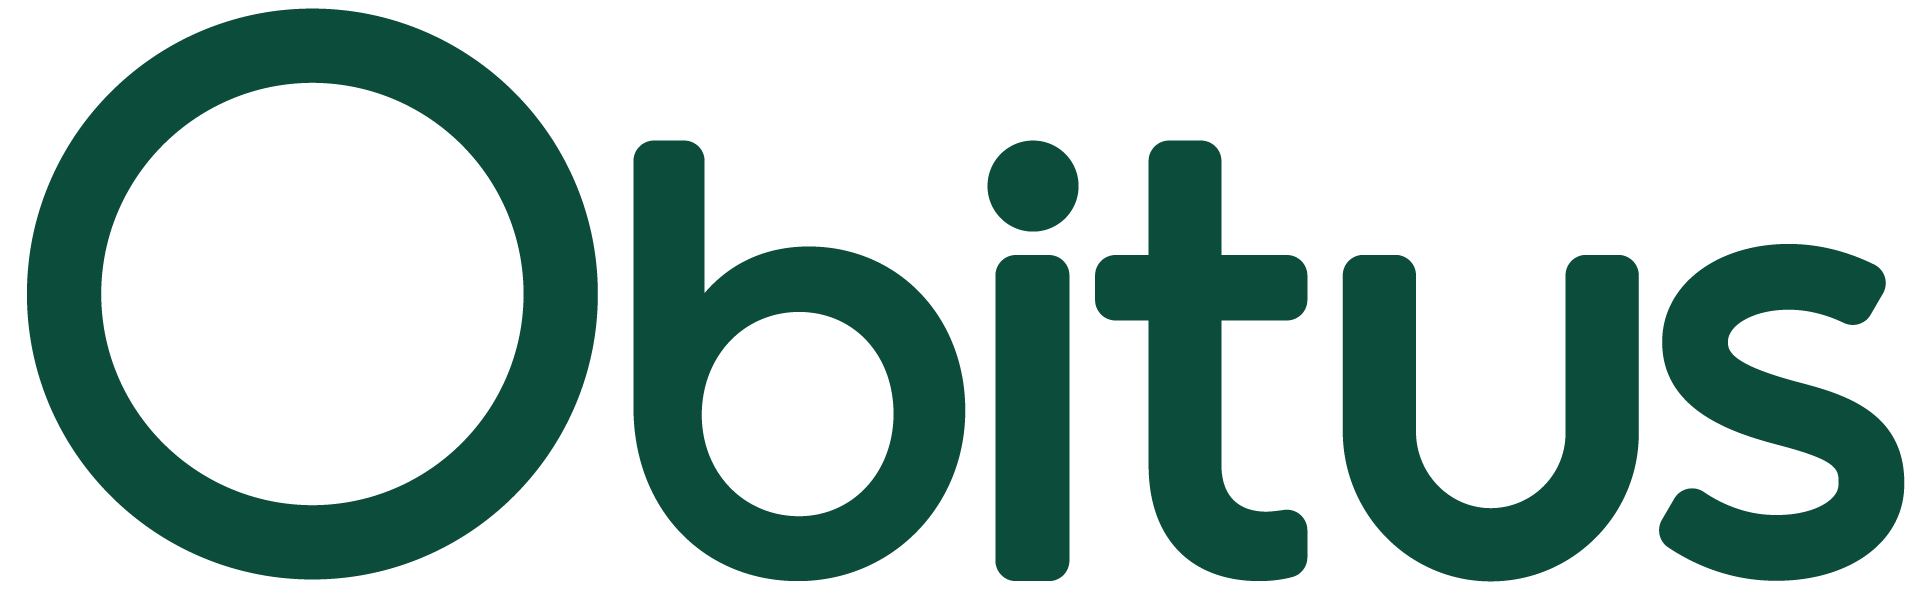 Green text logo reading 